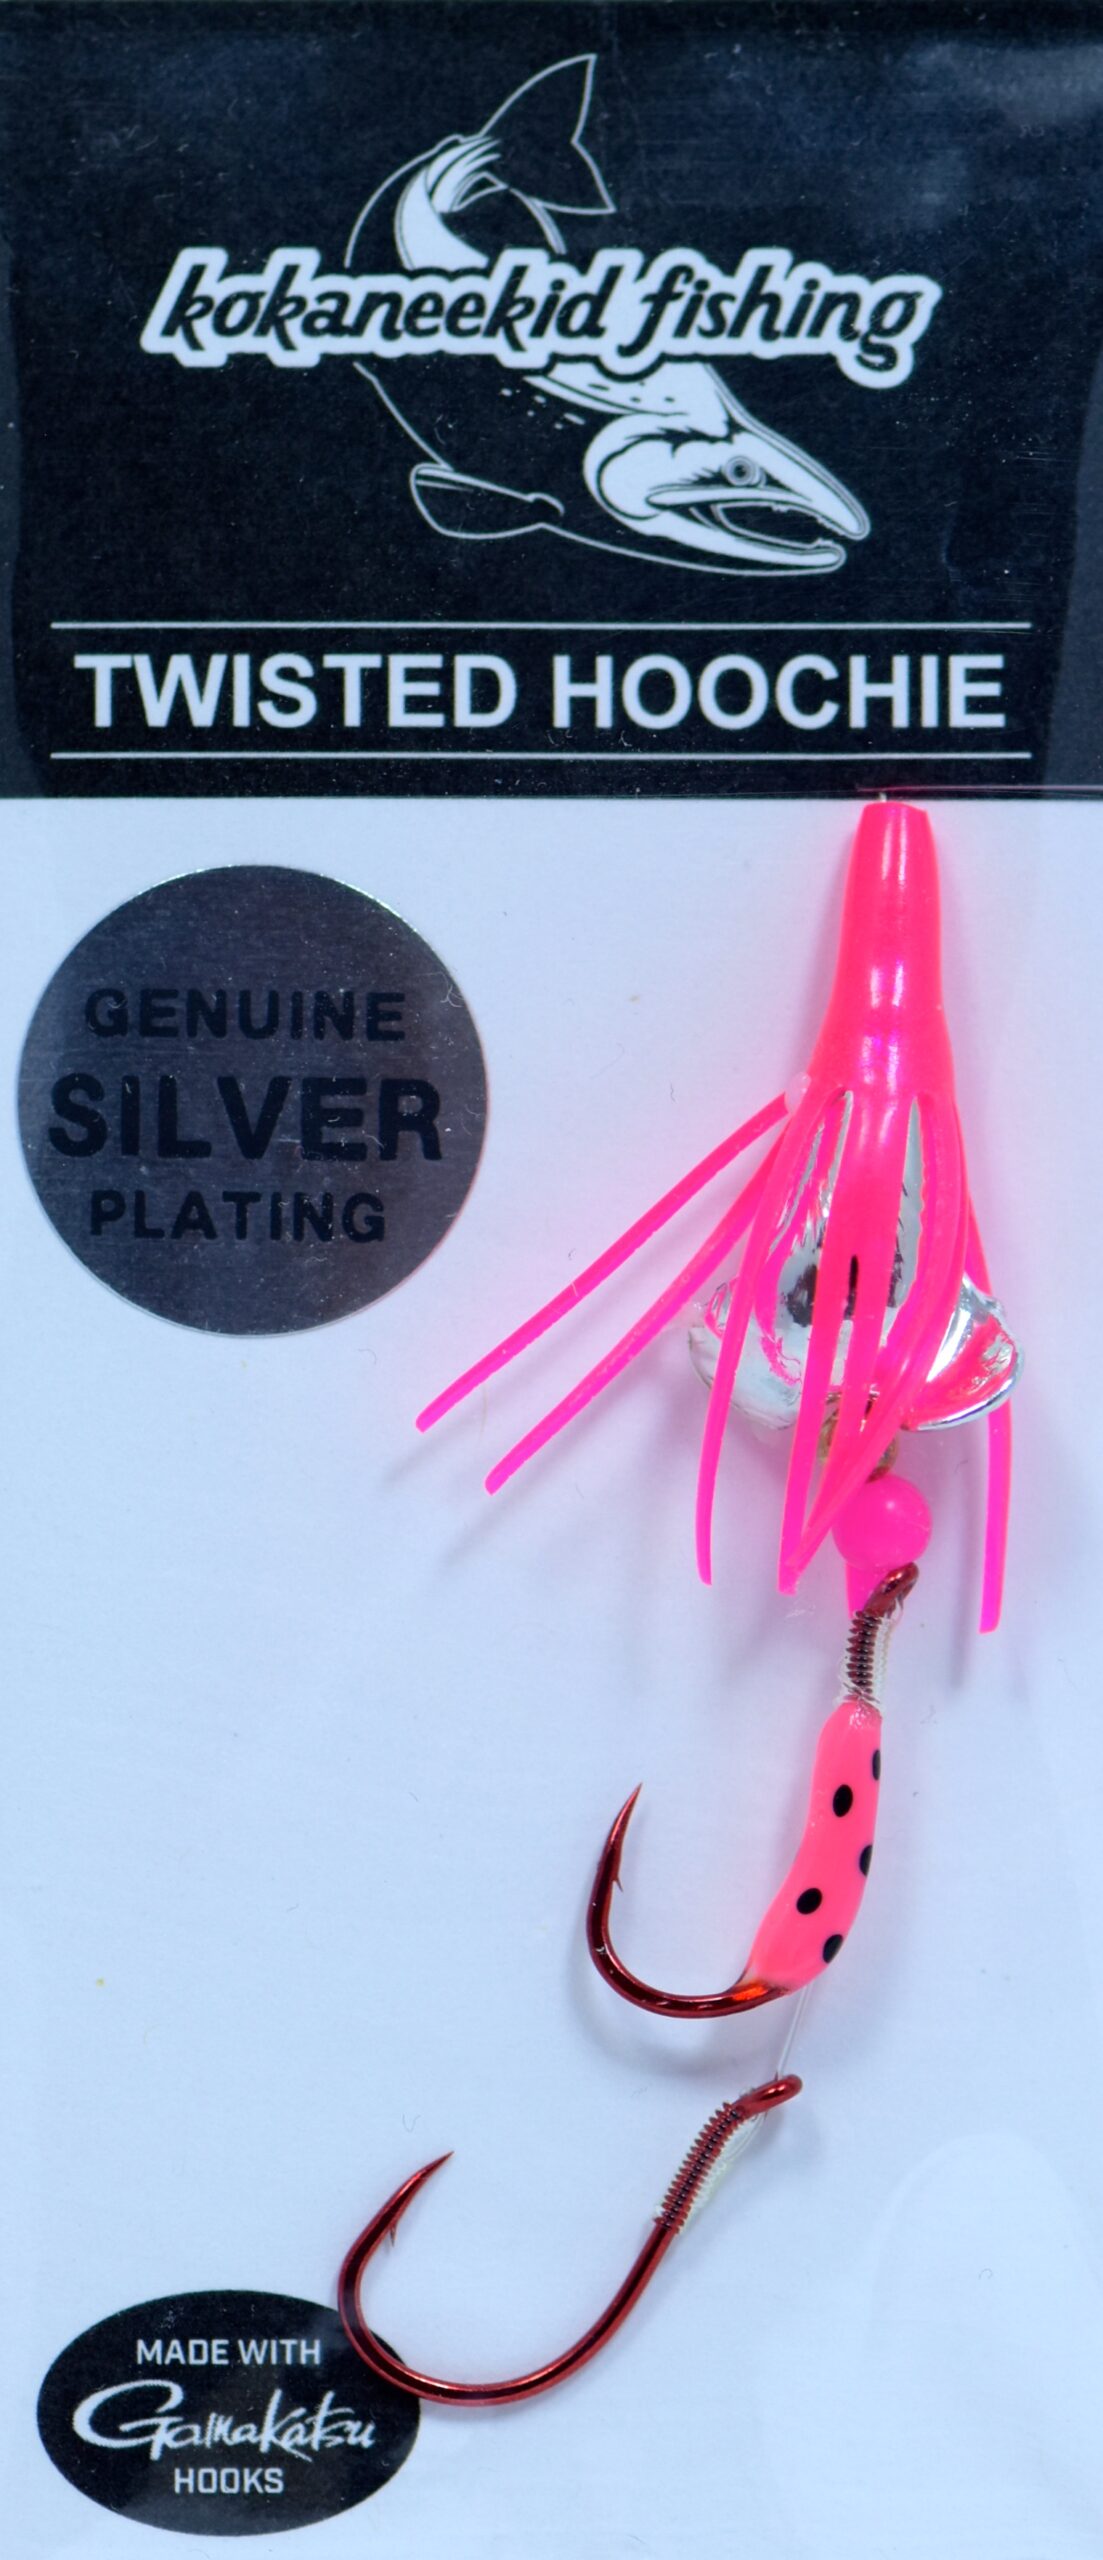 https://www.kokaneekidfishing.com/wp-content/uploads/2016/03/TH-Pink-Silver-scaled.jpg